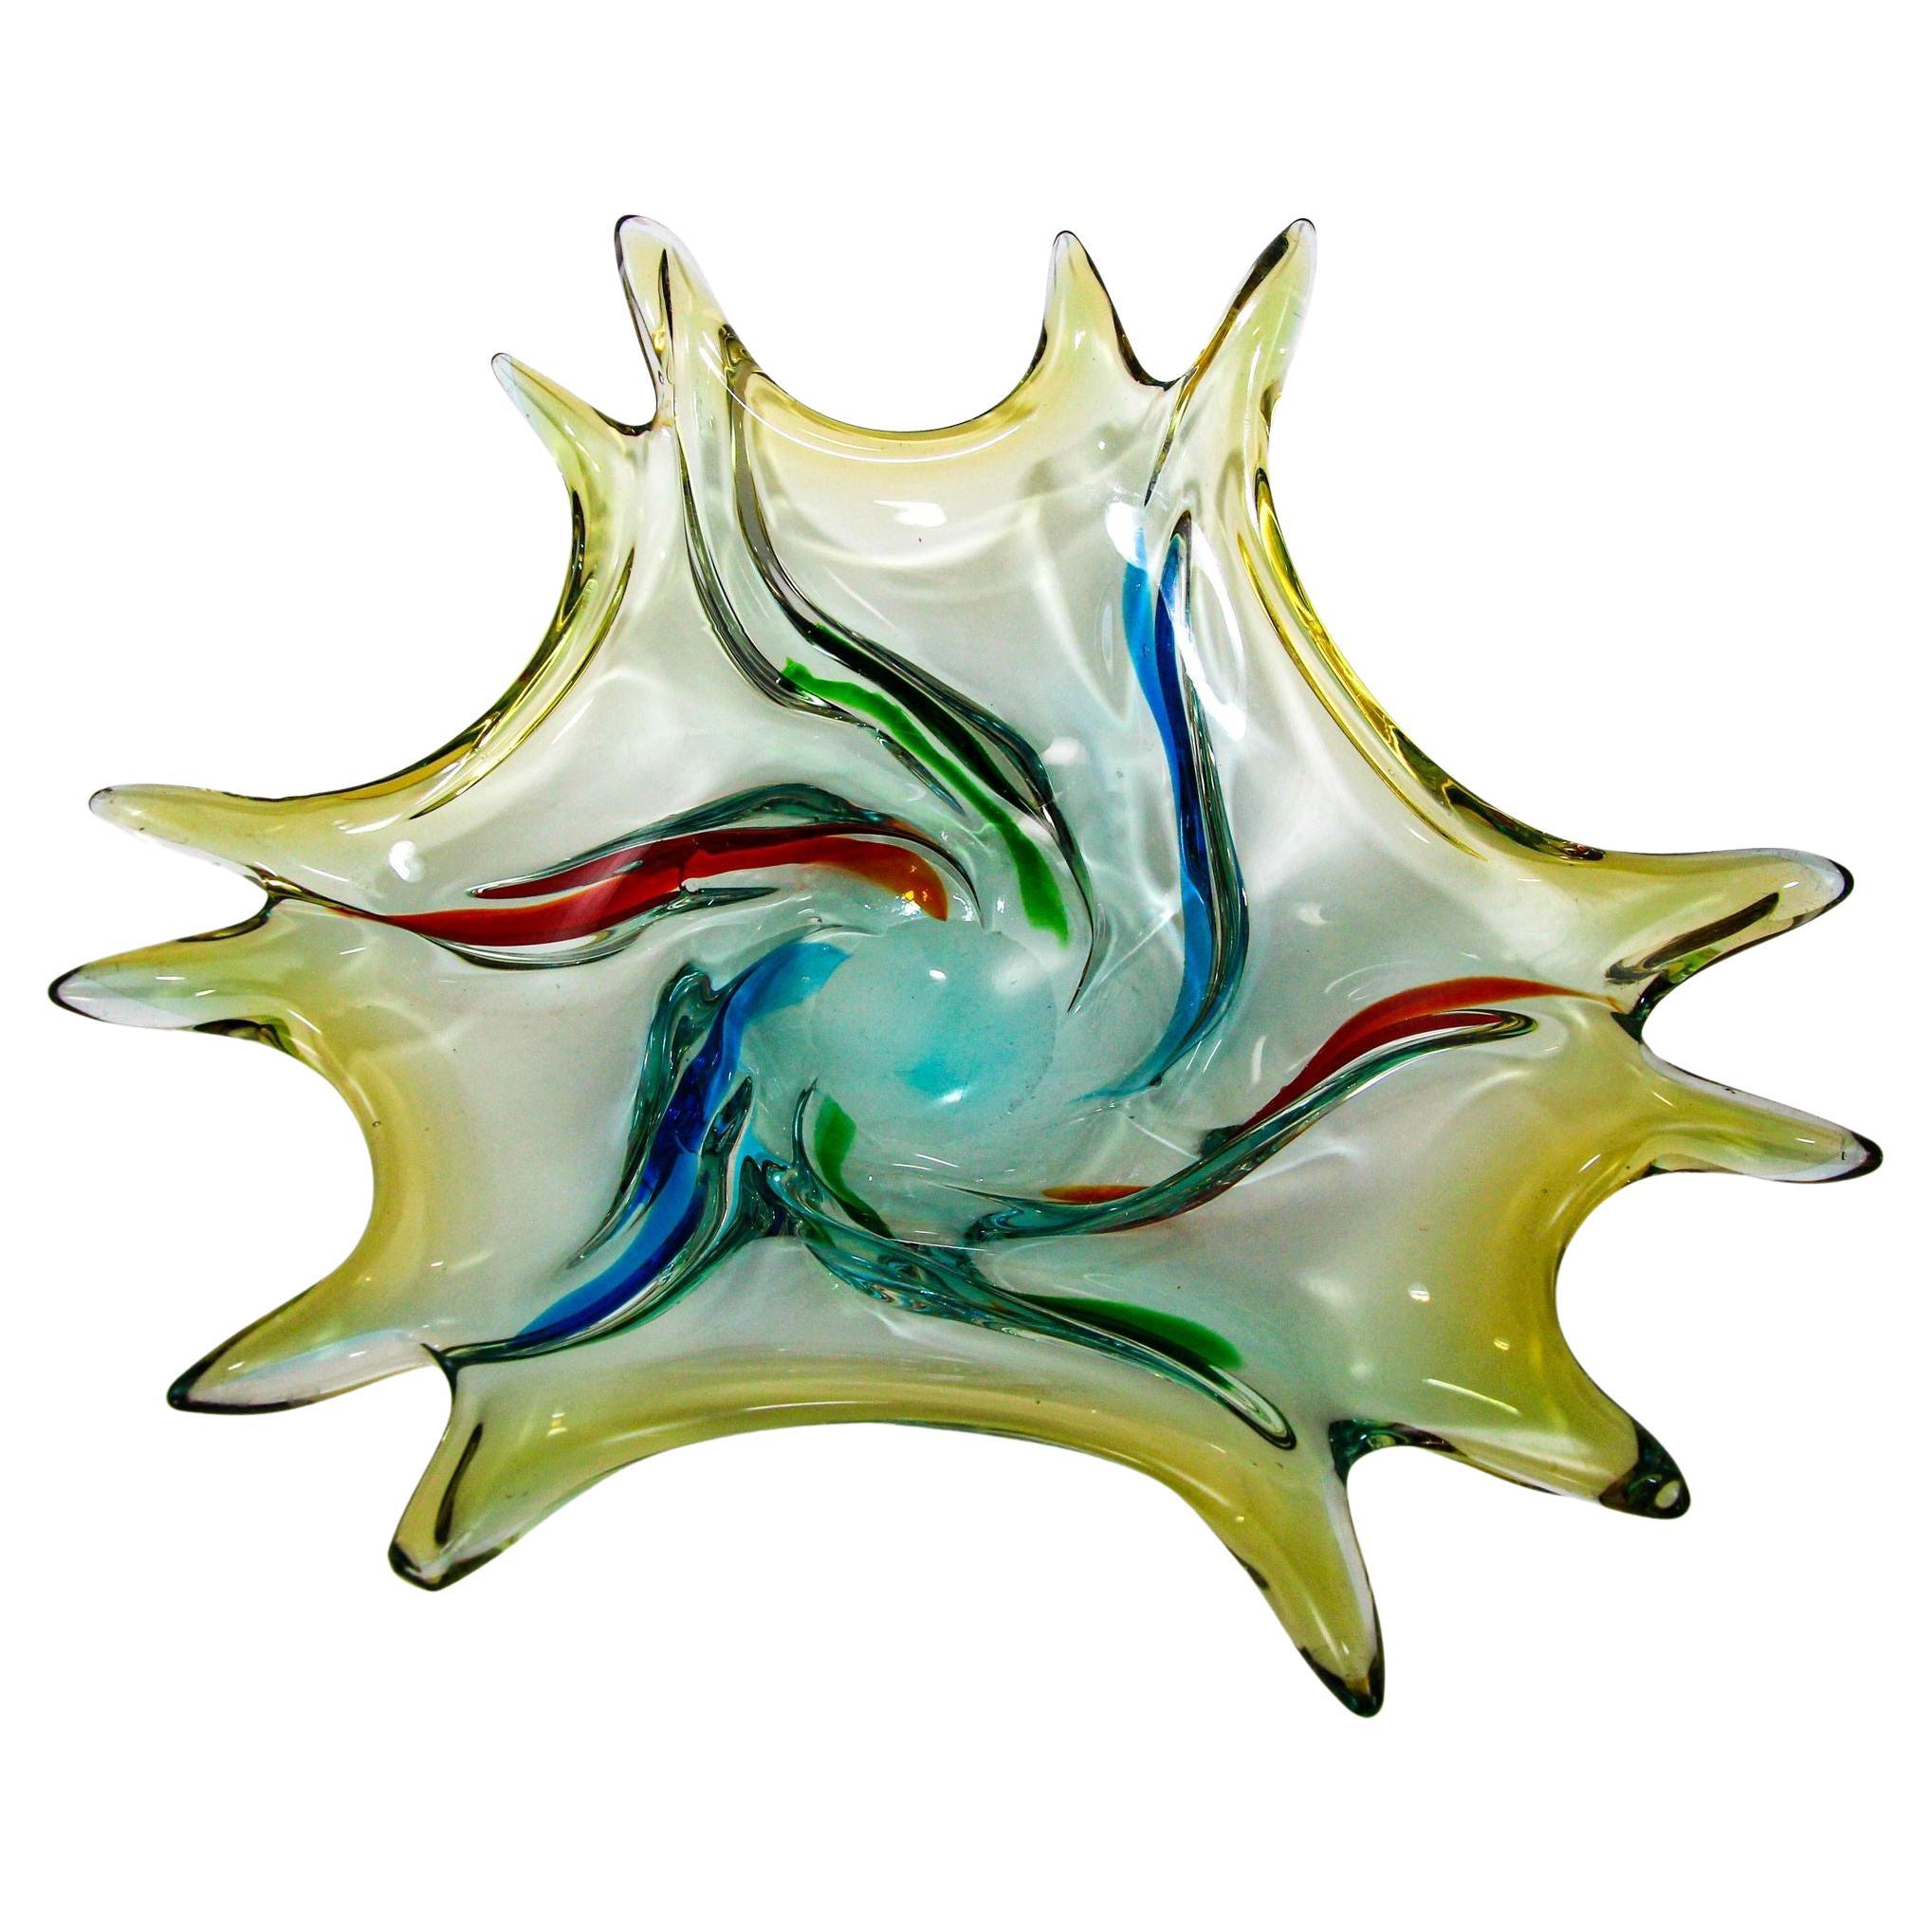 Vintage Italian Murano Art Glass Fruit Bowl Sculptural Centerpiece 1960s